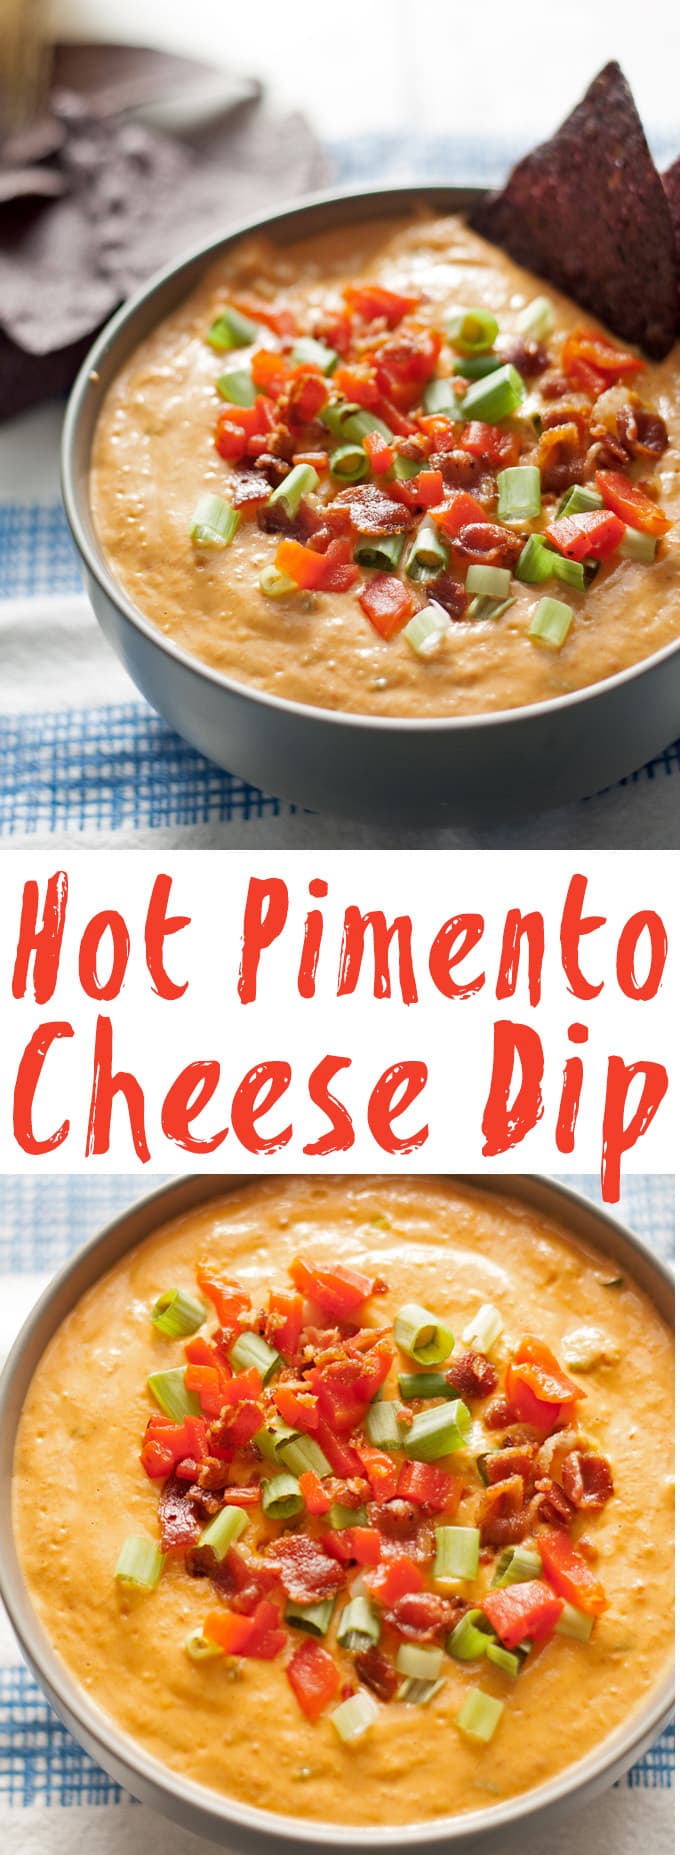 hot pimento cheese dip pin